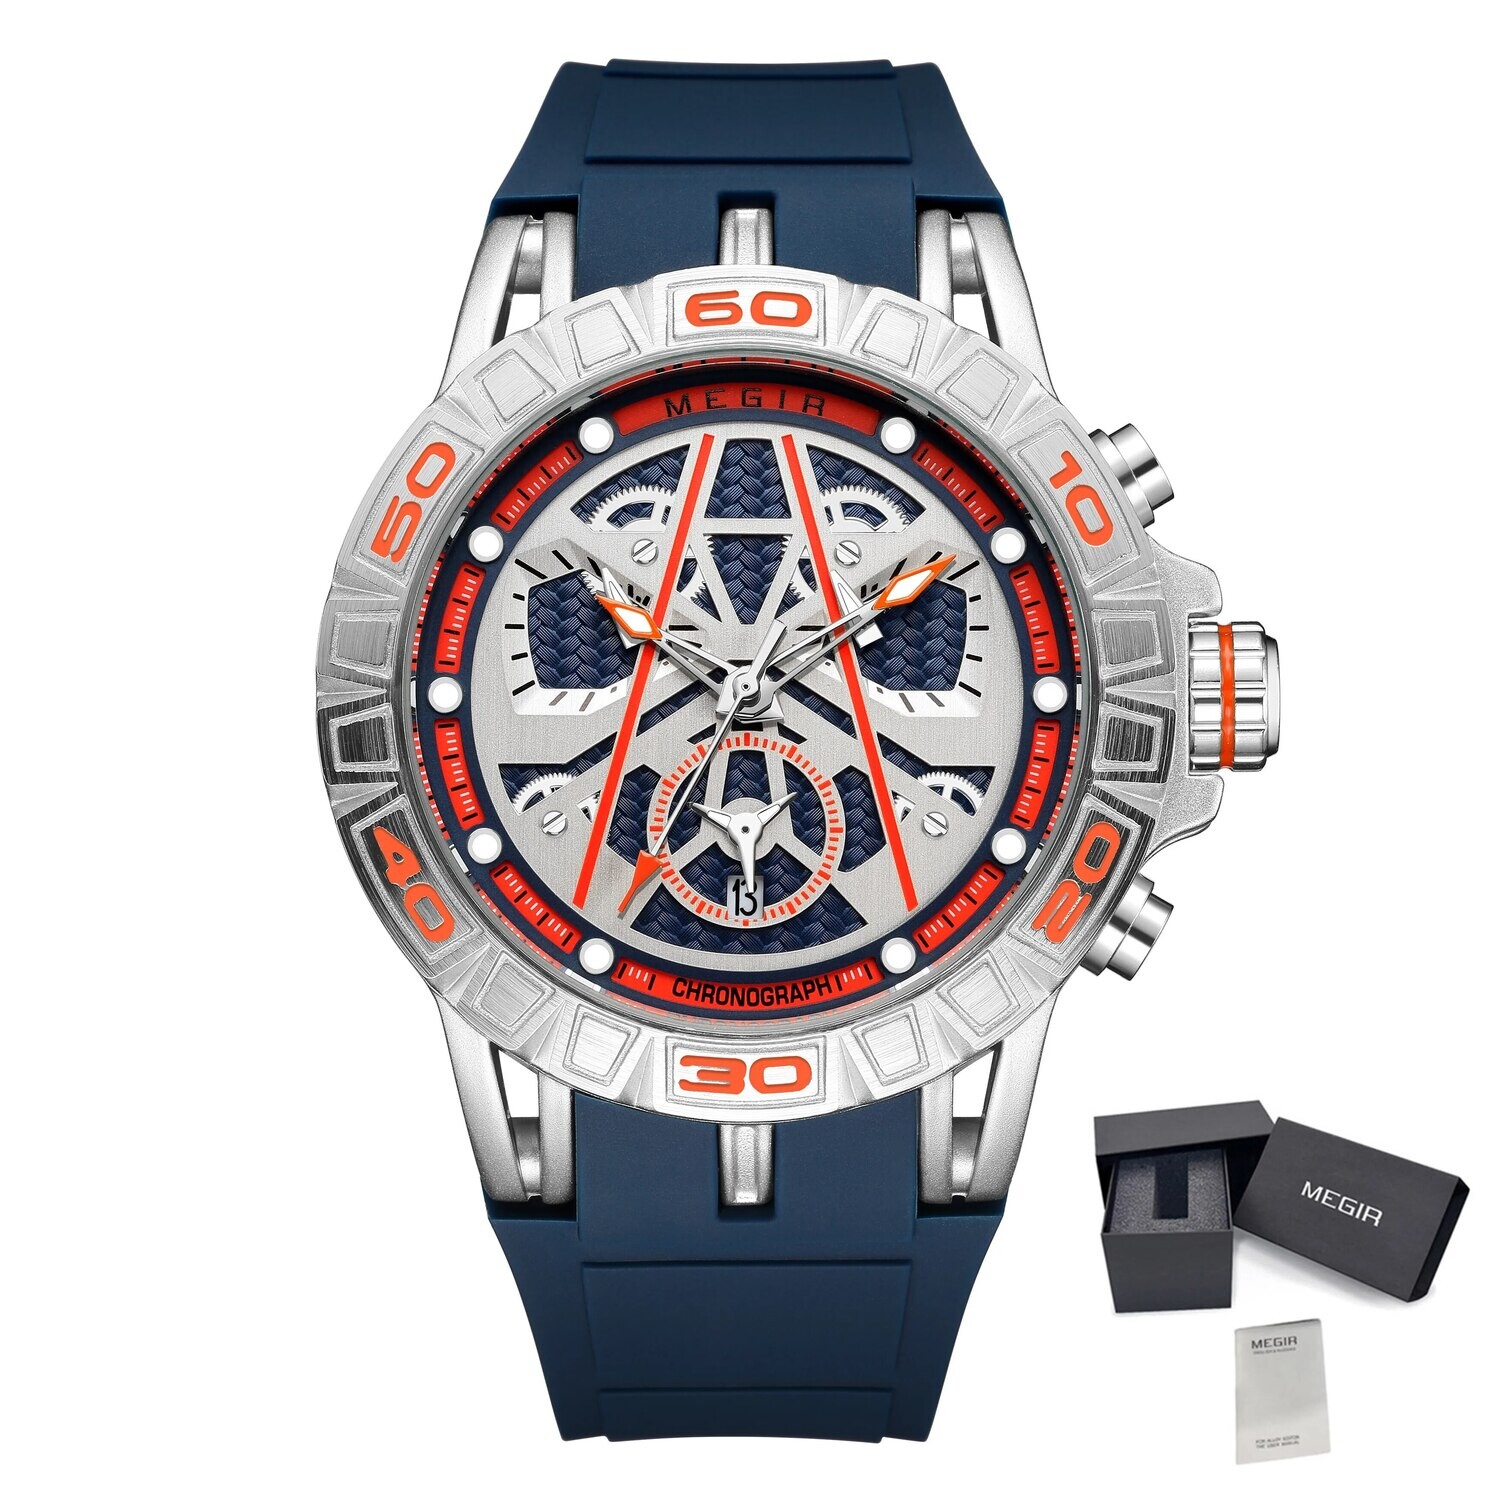 MEGIR Fashion Sports Watch for Men Silicone Strap Chronograph Wristwatch Waterproof Man Military Quartz Reloj Hombre with Date, Color: Silver Blue